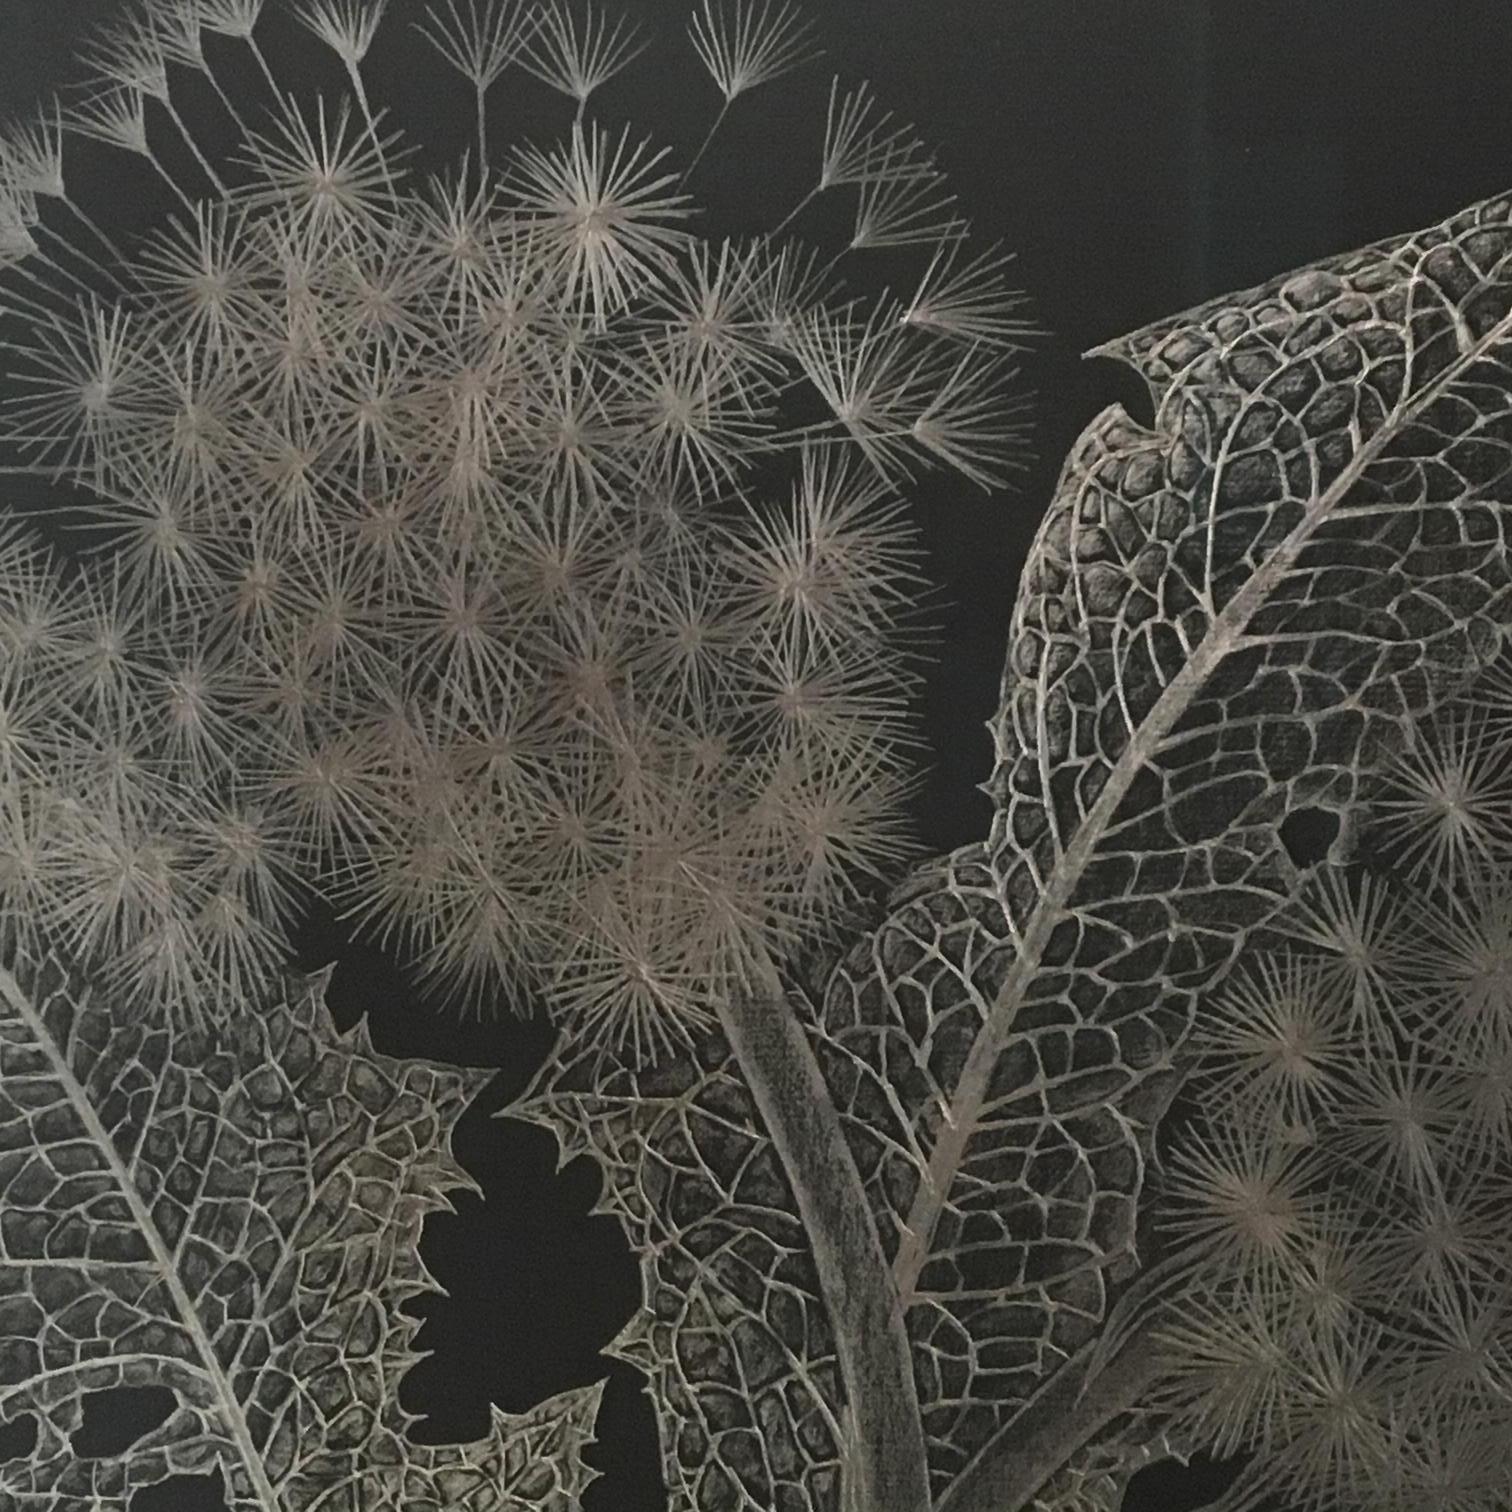 Two Dandelions Two, Metallic Silver Botanical Graphite Drawing, Black, Plant 3